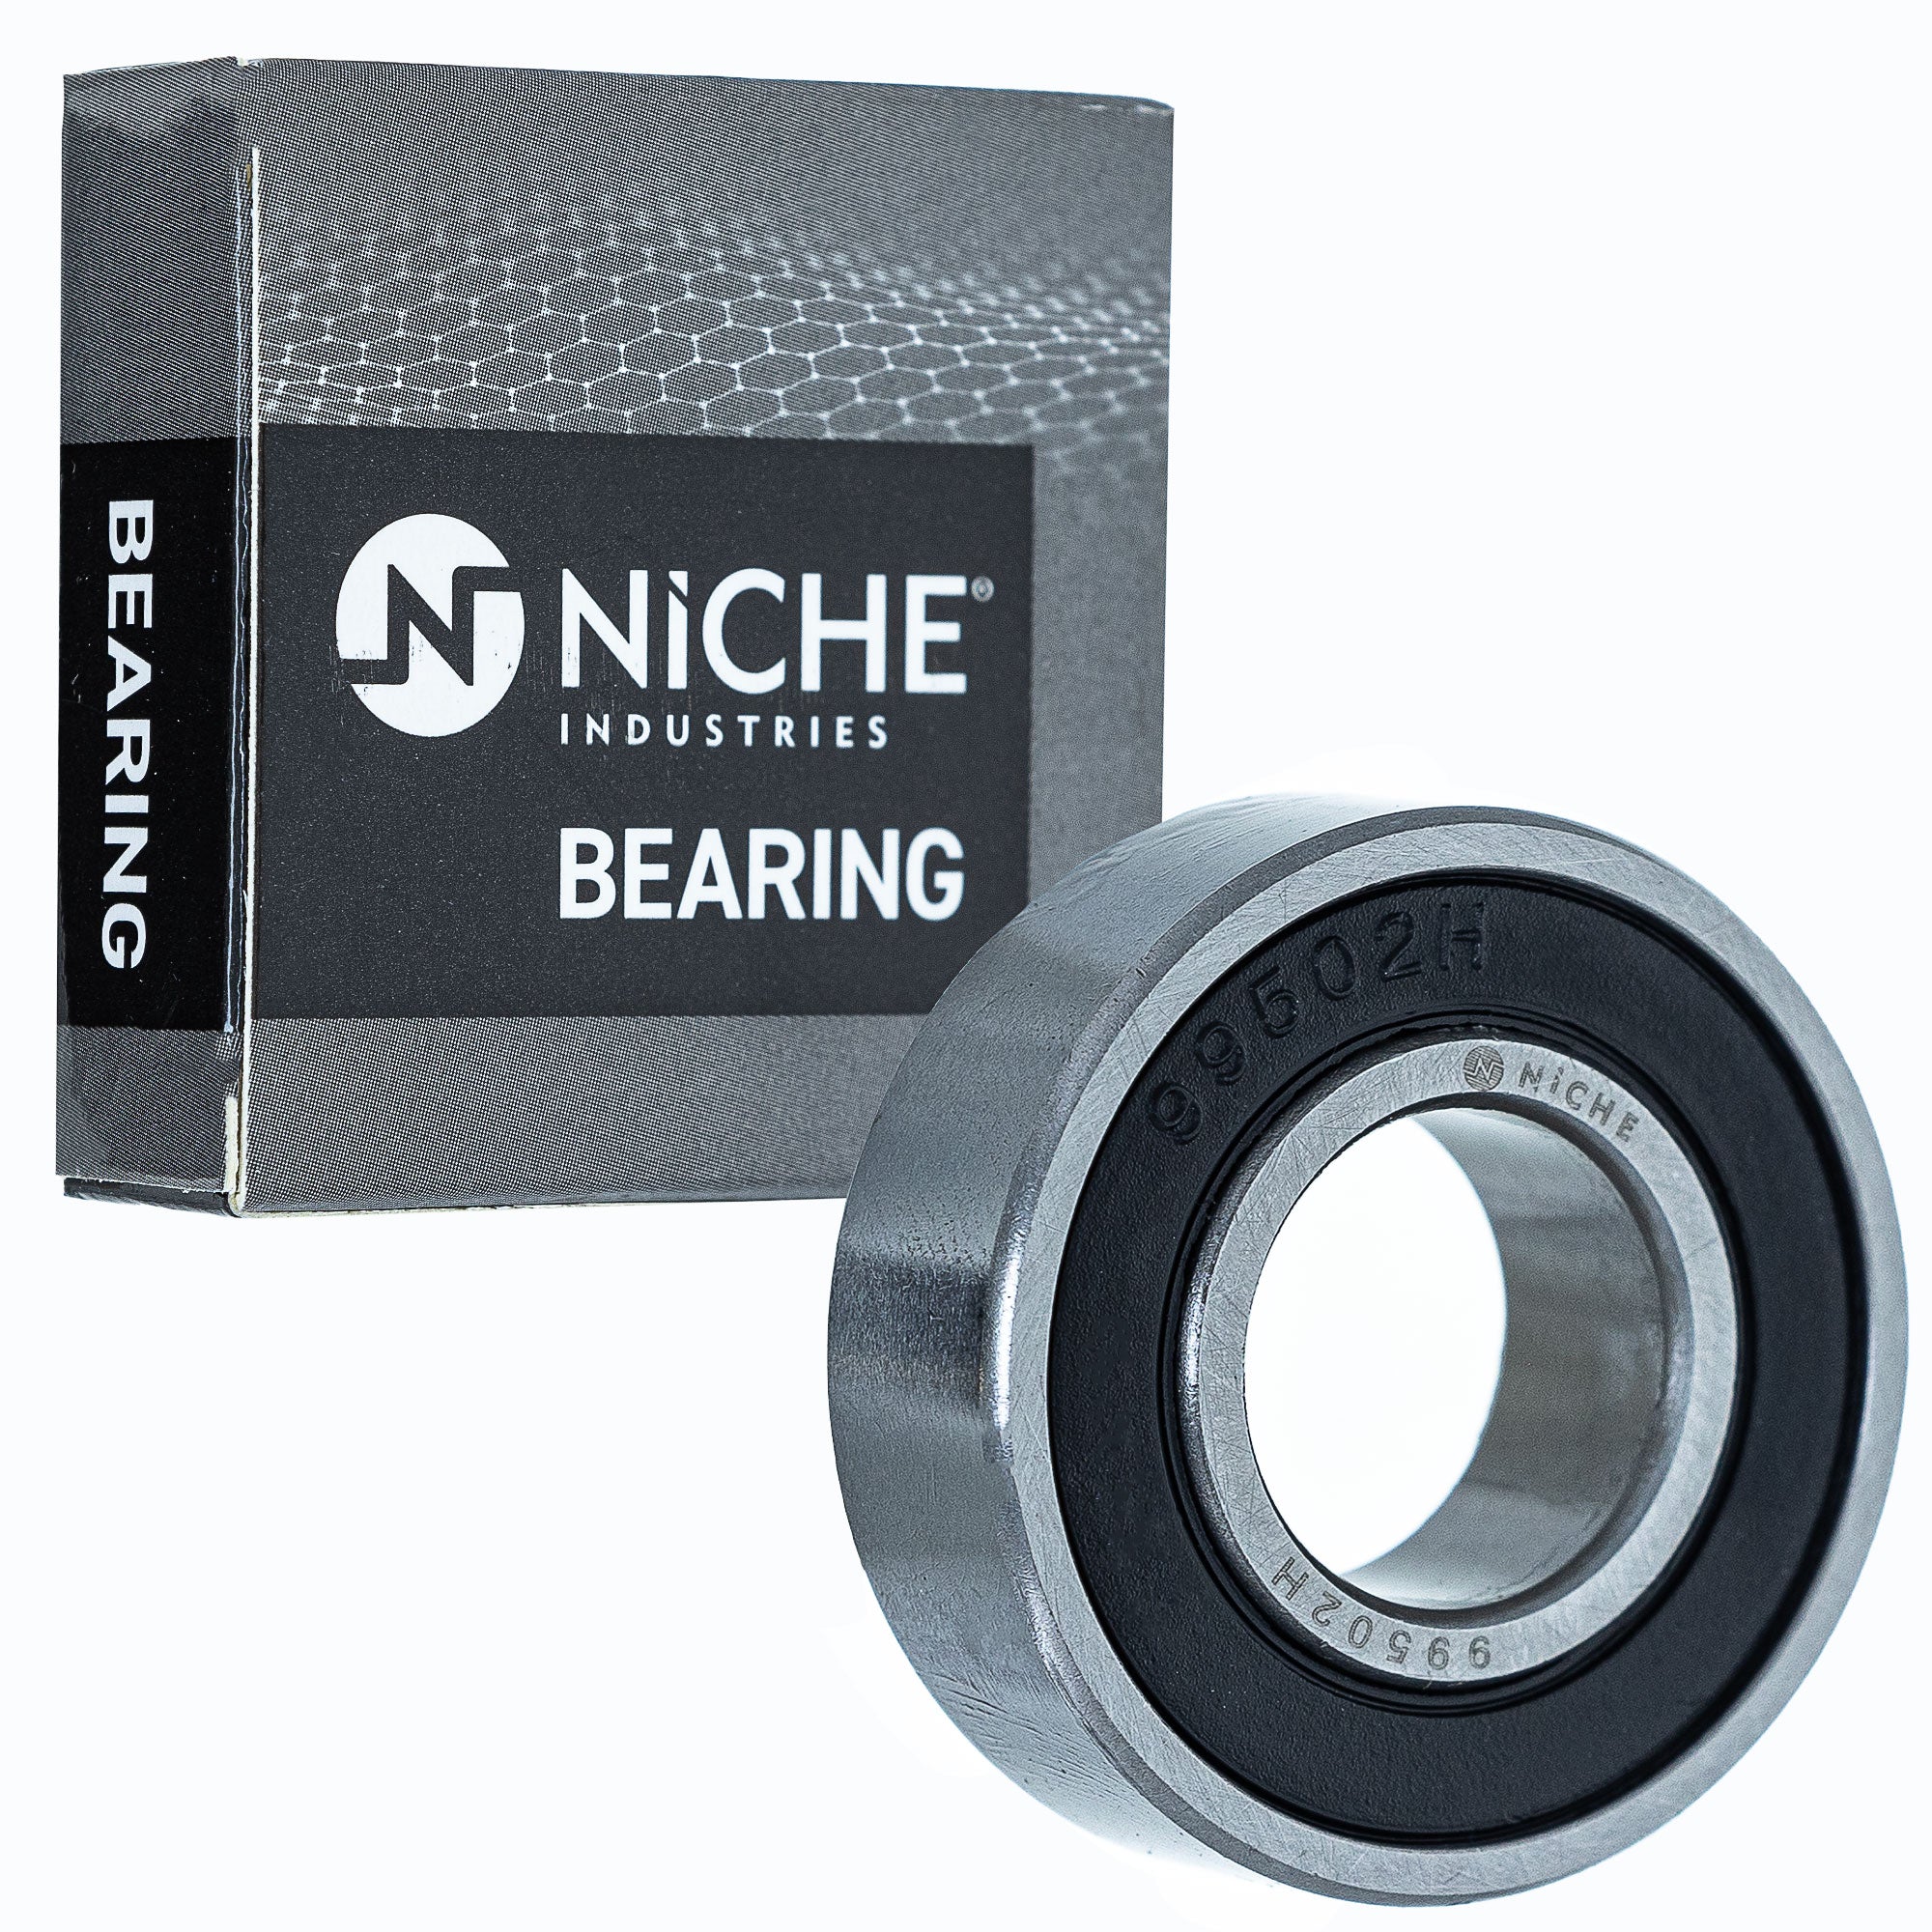 NICHE 519-CBB2237R Bearing 10-Pack for Ref No KLT250A KLT200C KLT200B